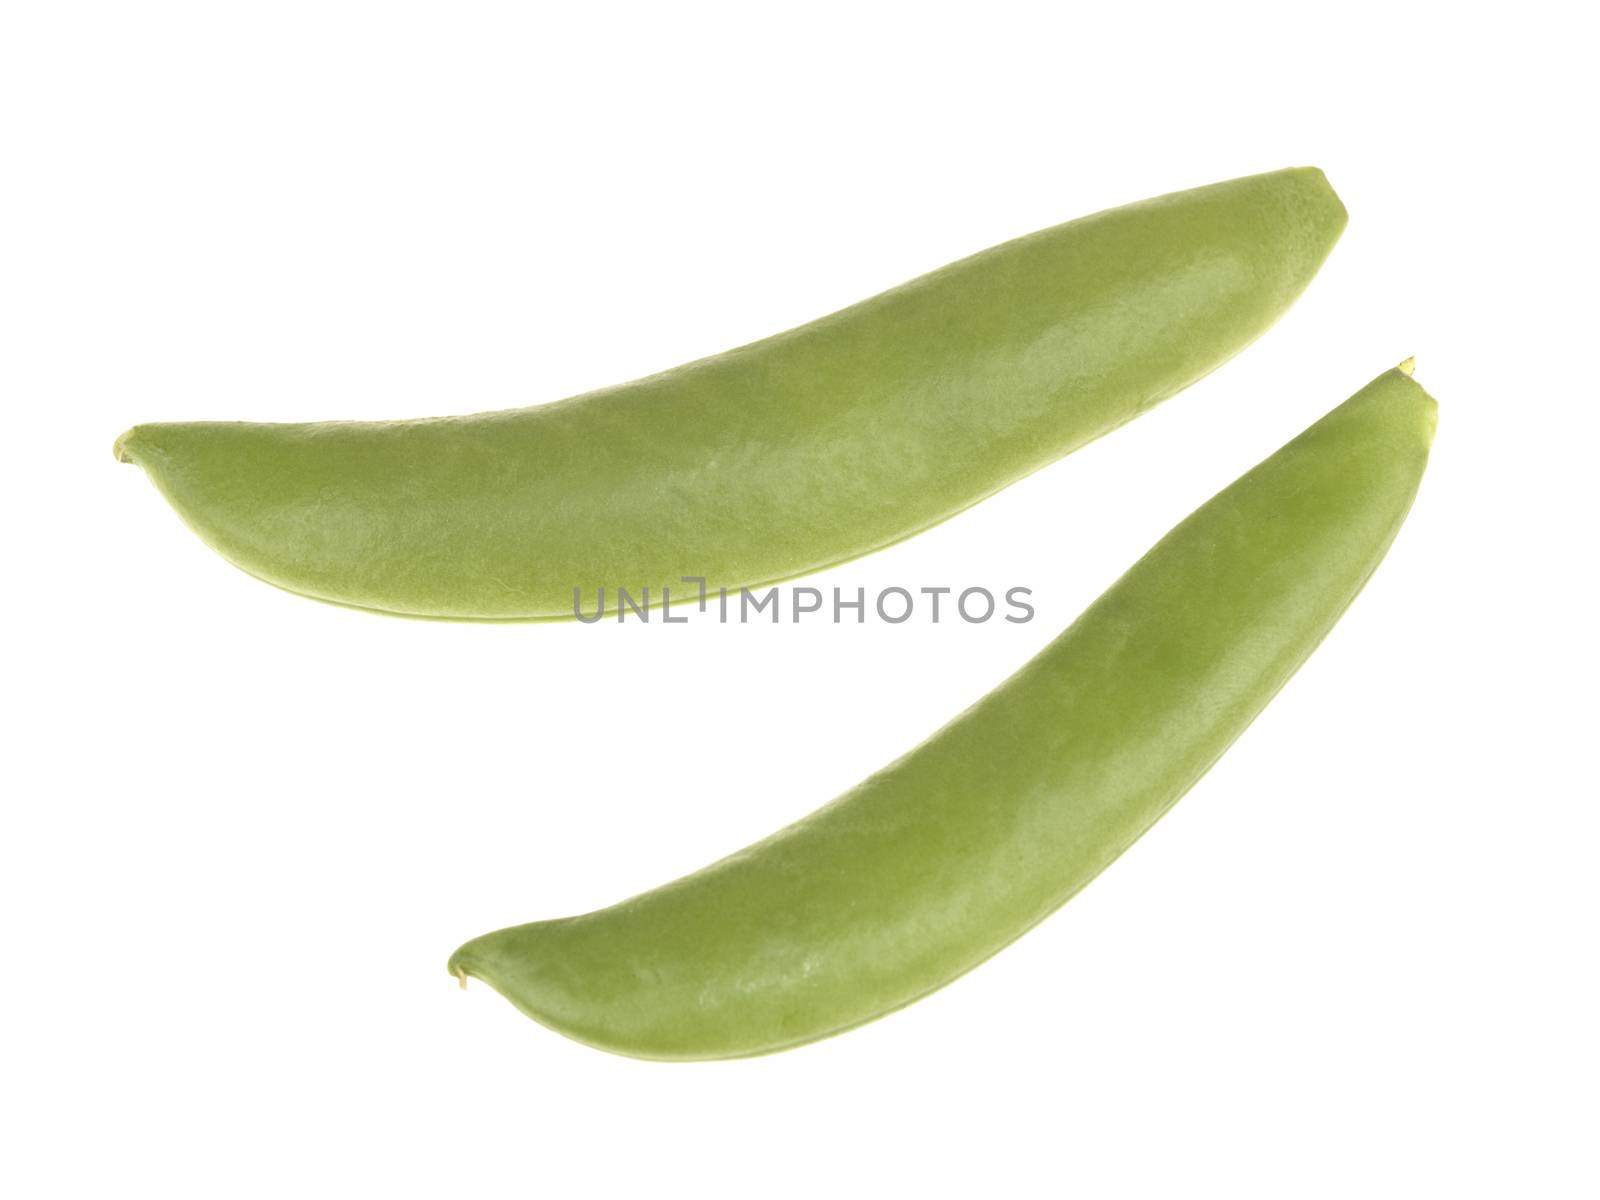 Garden Peas by Whiteboxmedia